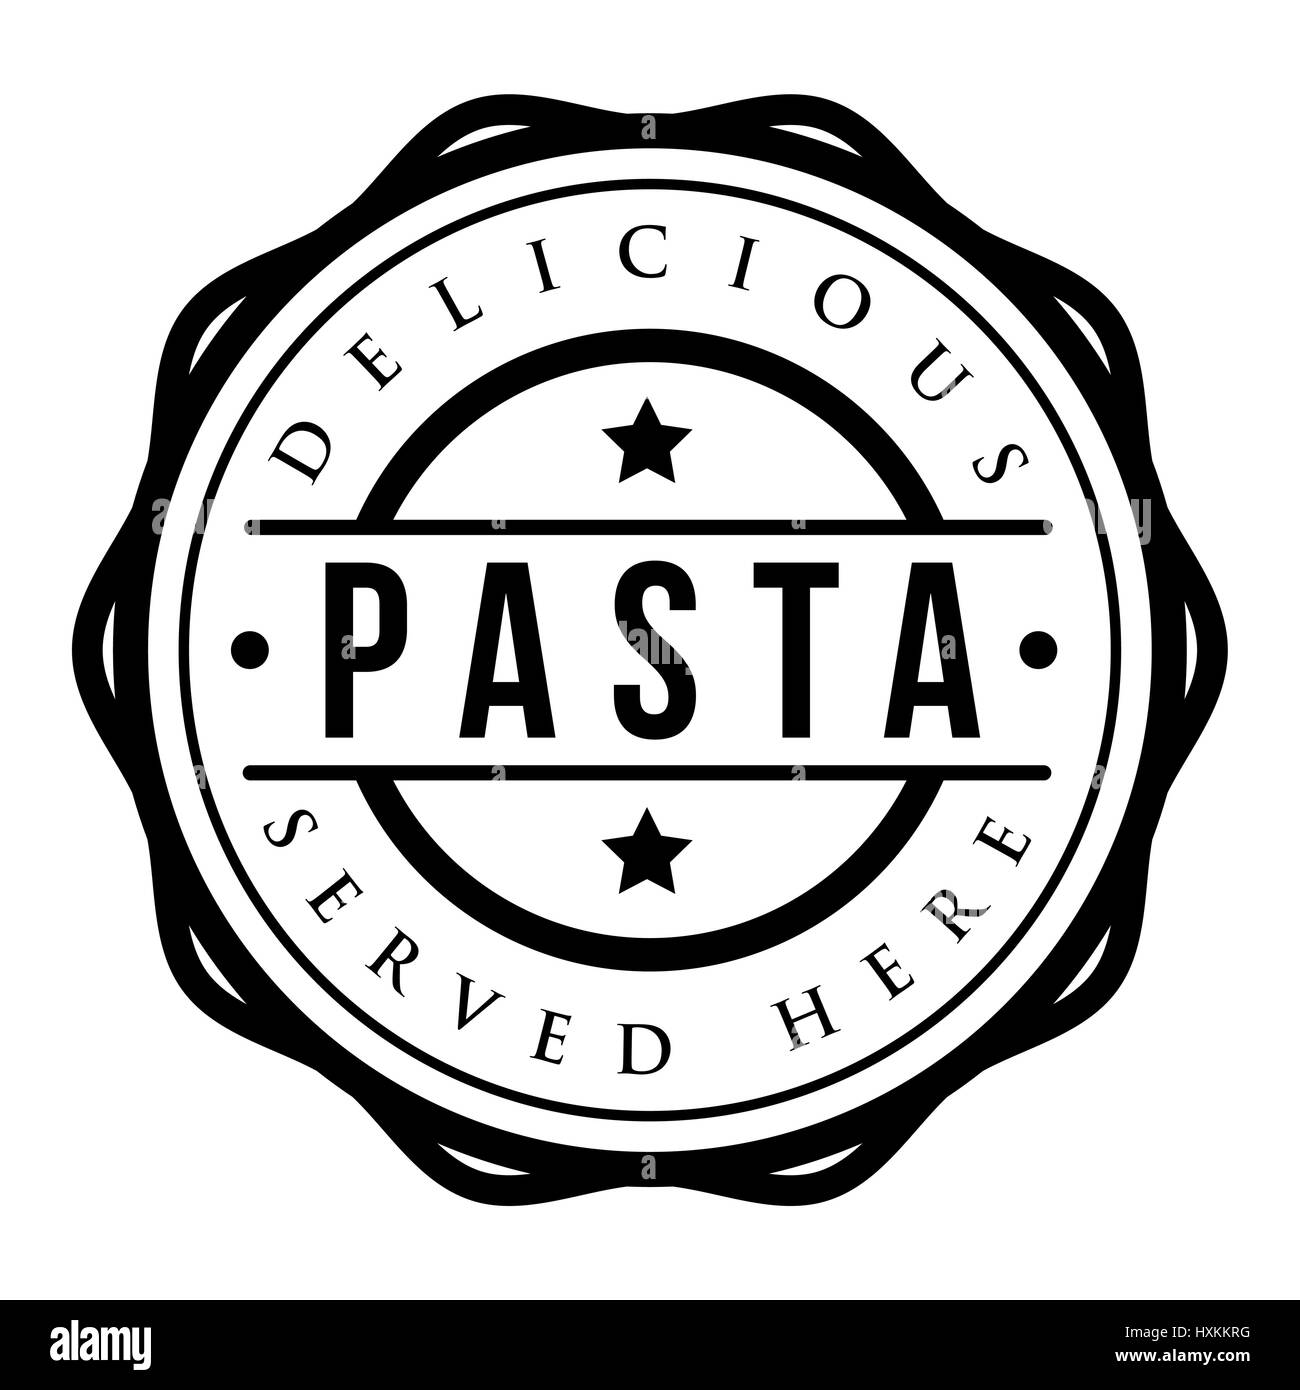 Pasta vintage stamp vector Stock Vector